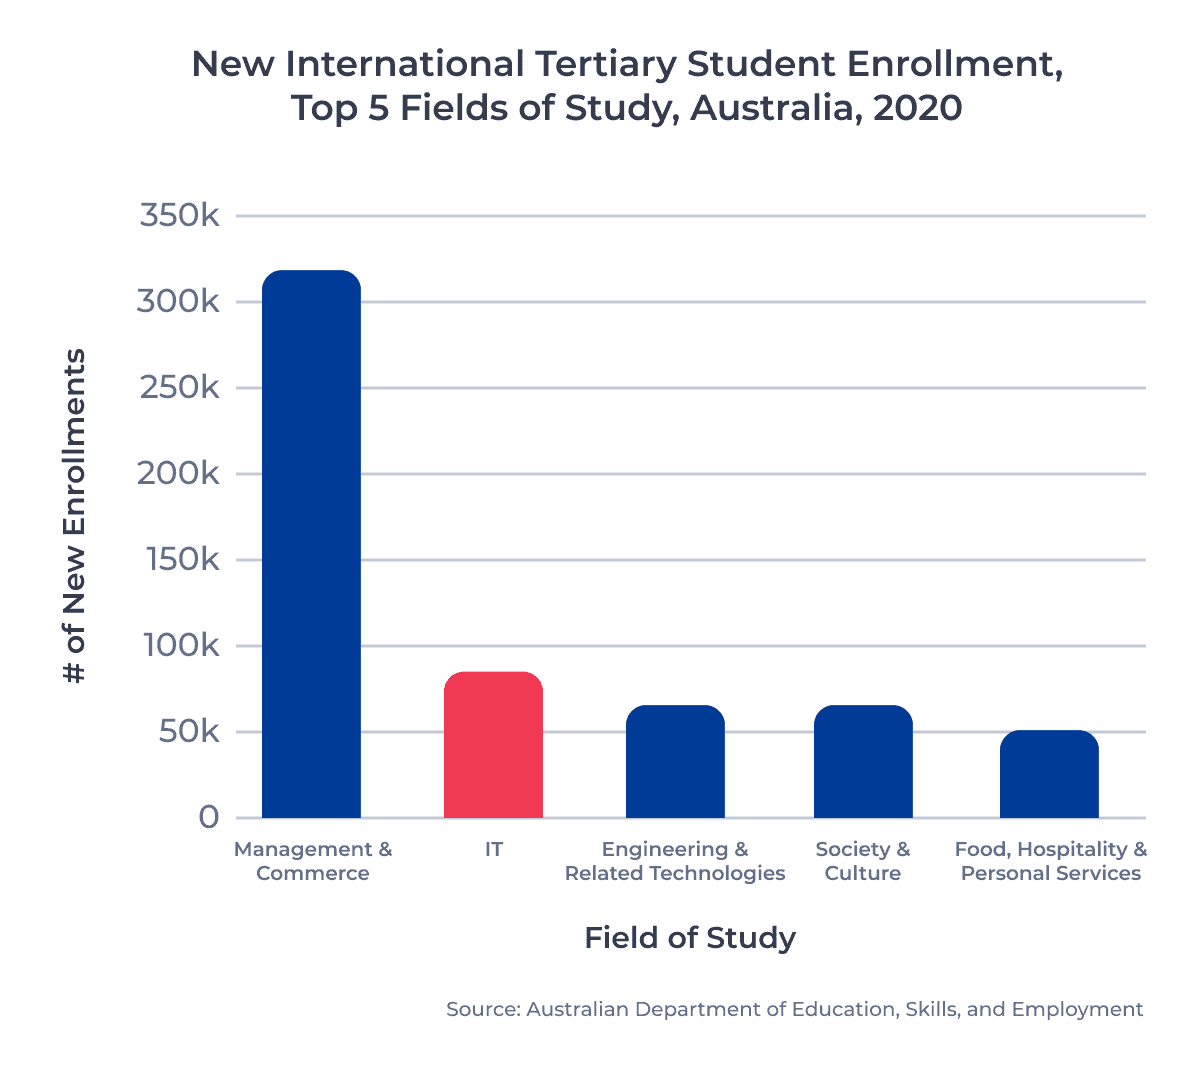 New International Tertiary Student Enrollment, Top 5 Fields of Study, Australia, 2020